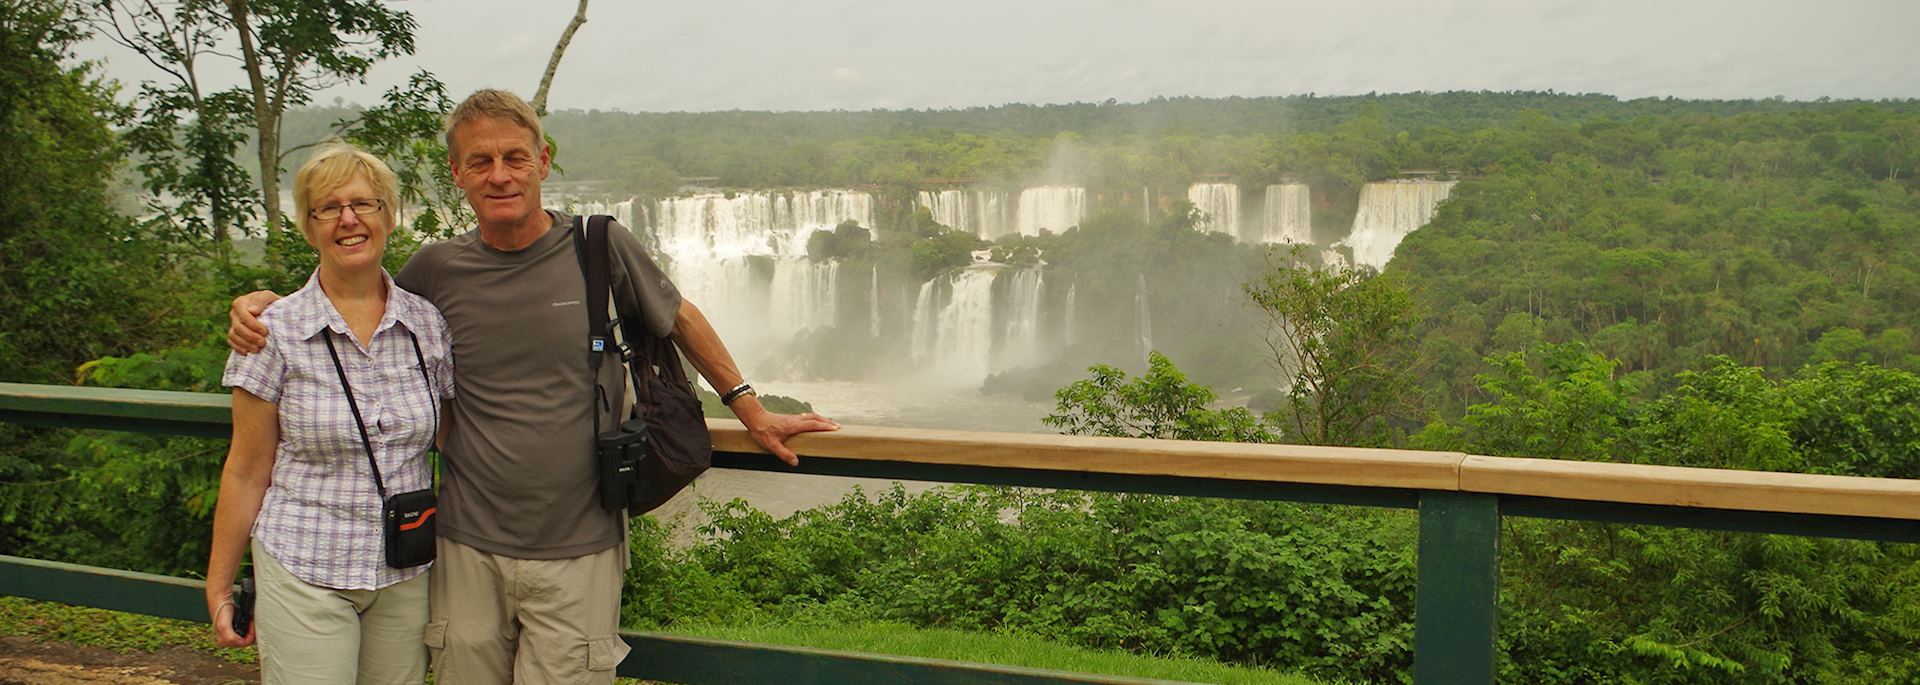 Dave and Ann Brierley at Iguaçu Falls